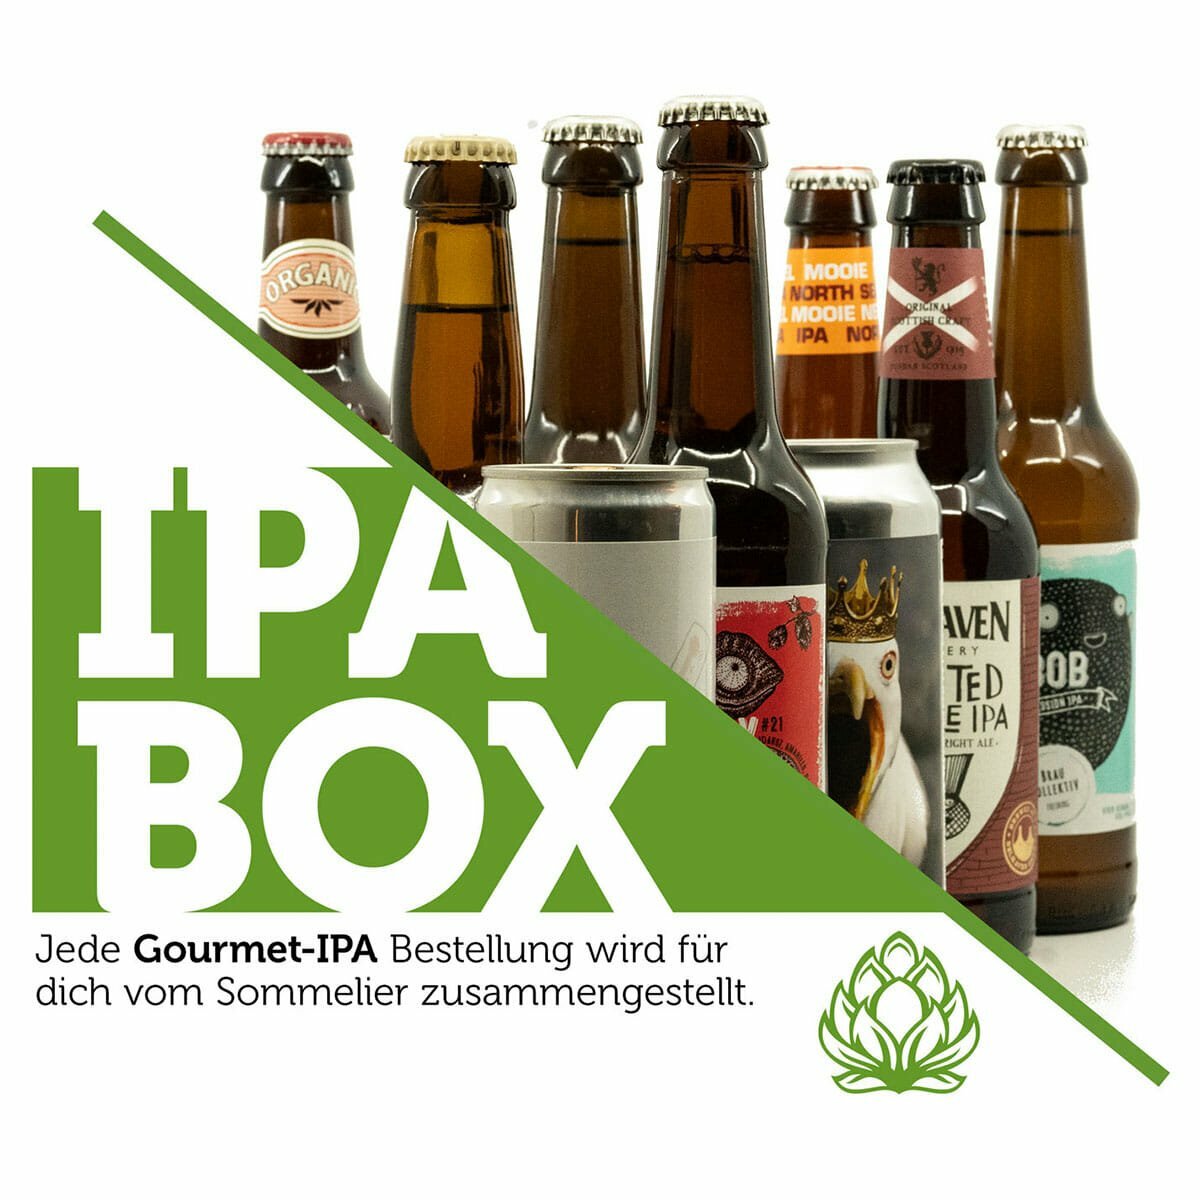 Craft Bier IPA Box